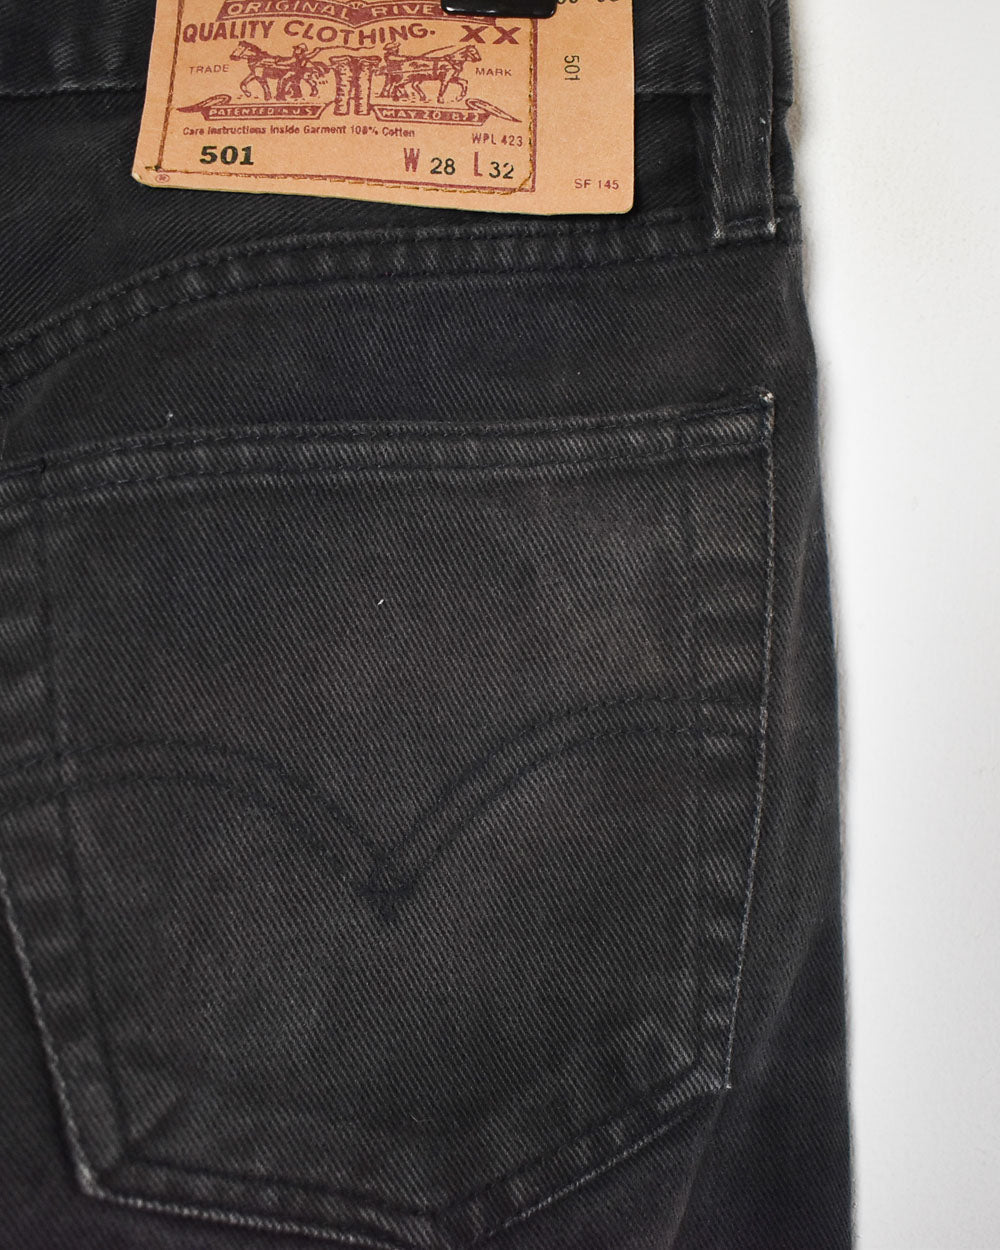 Black Levi's 501 USA Jeans - W28 L30